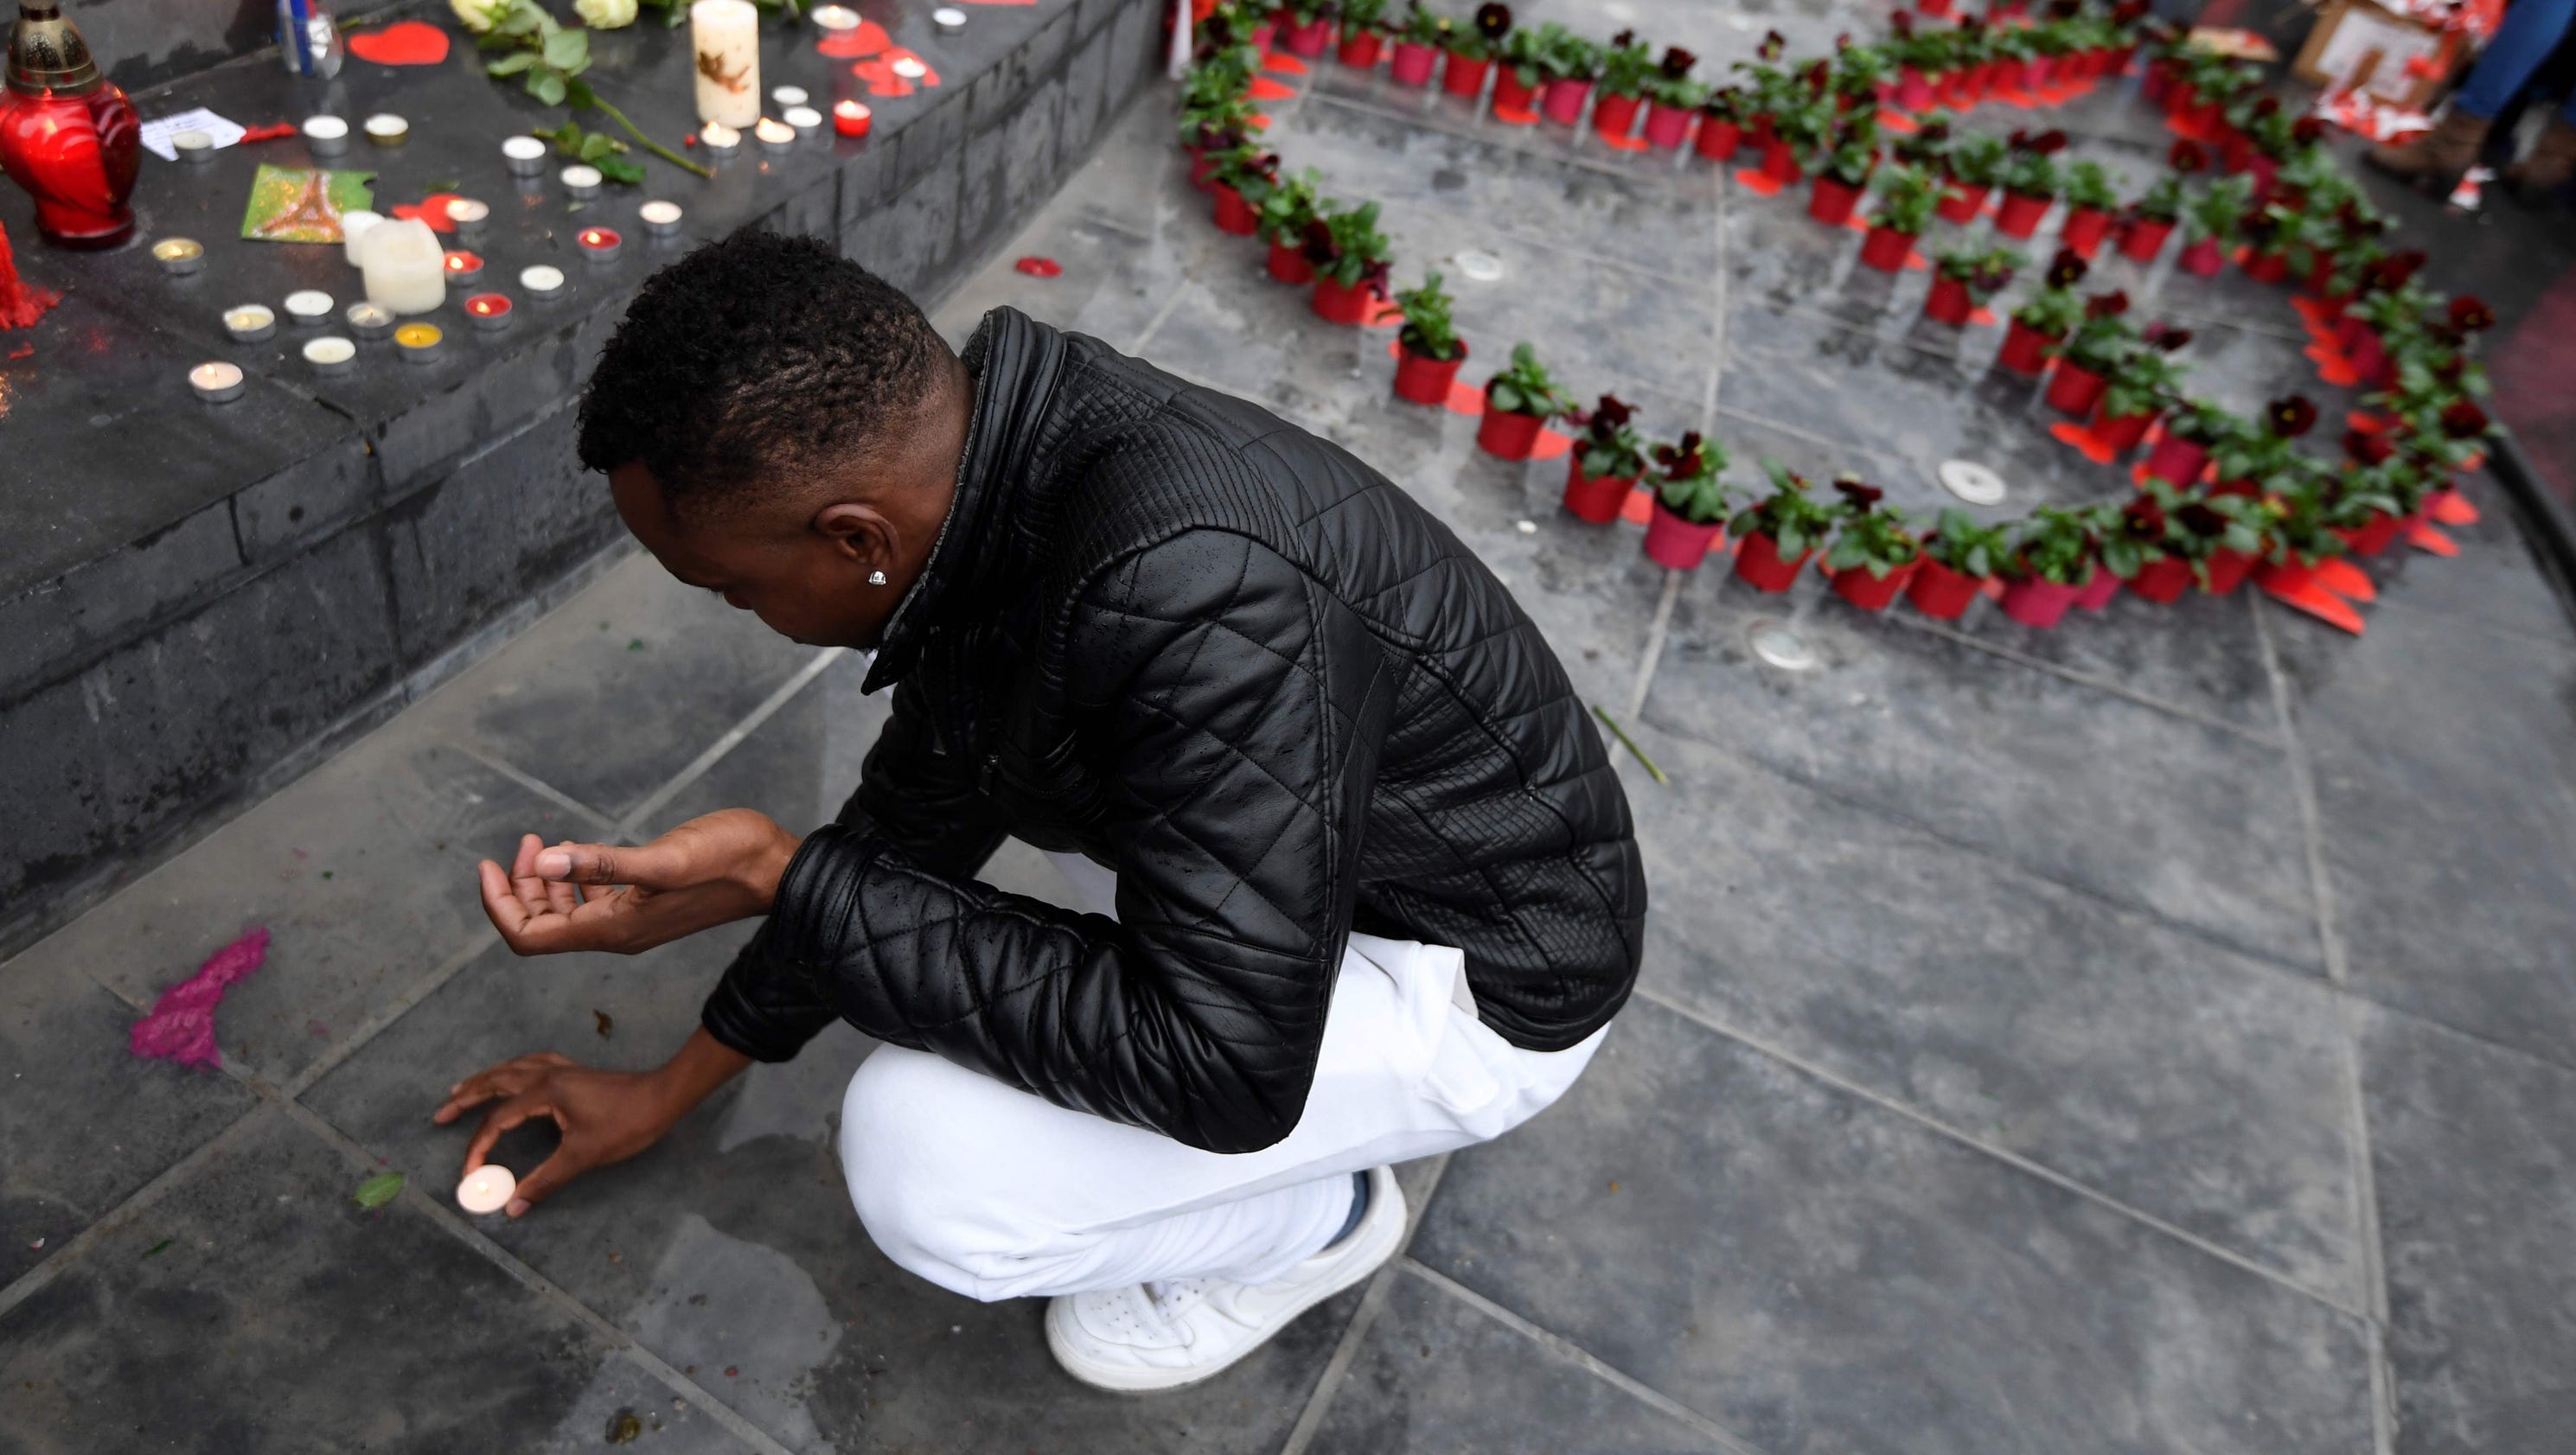 Paris marks first anniversary of terrorist attacks